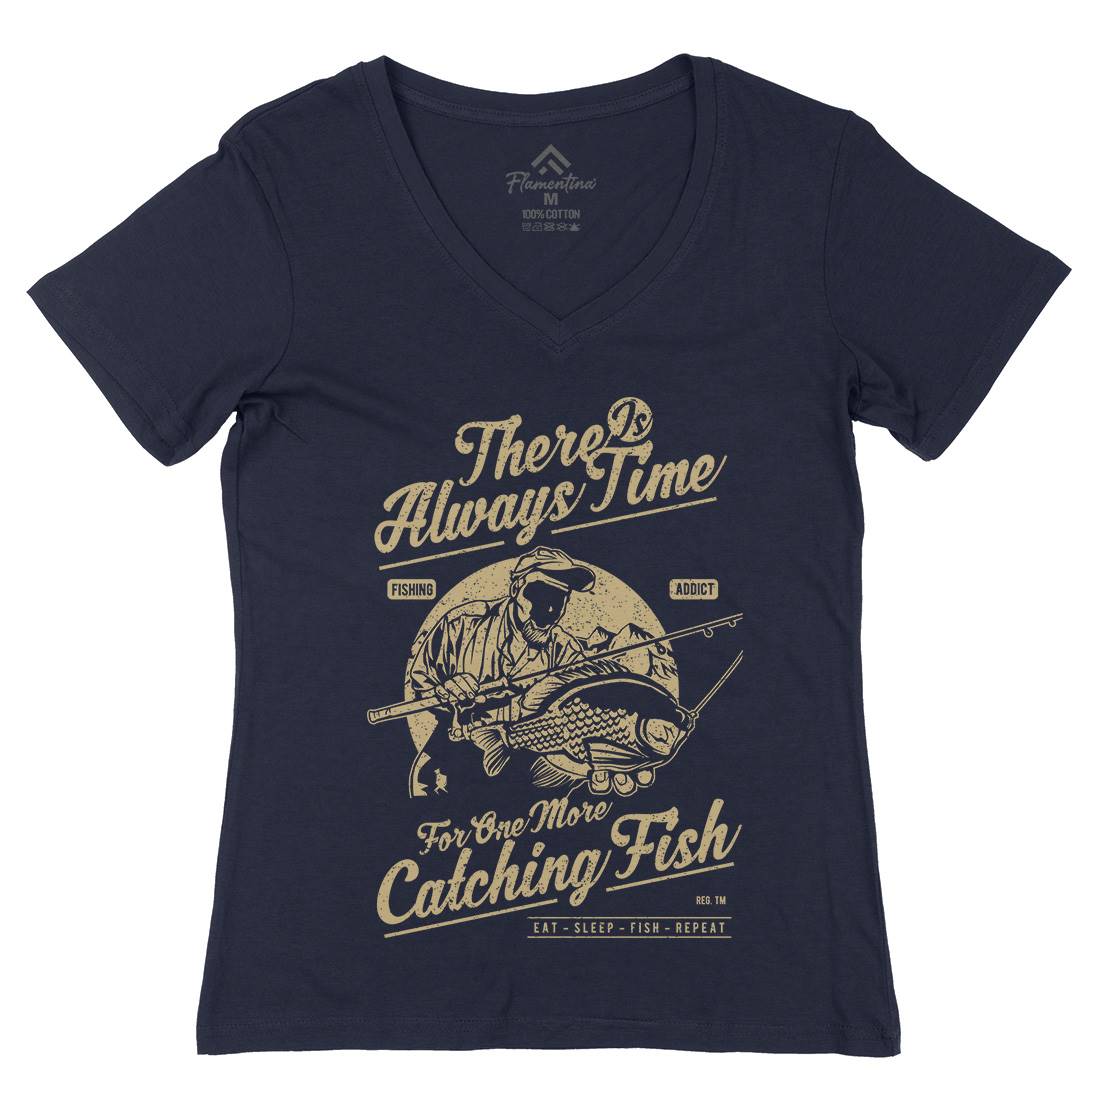 One More Catching Womens Organic V-Neck T-Shirt Fishing A731